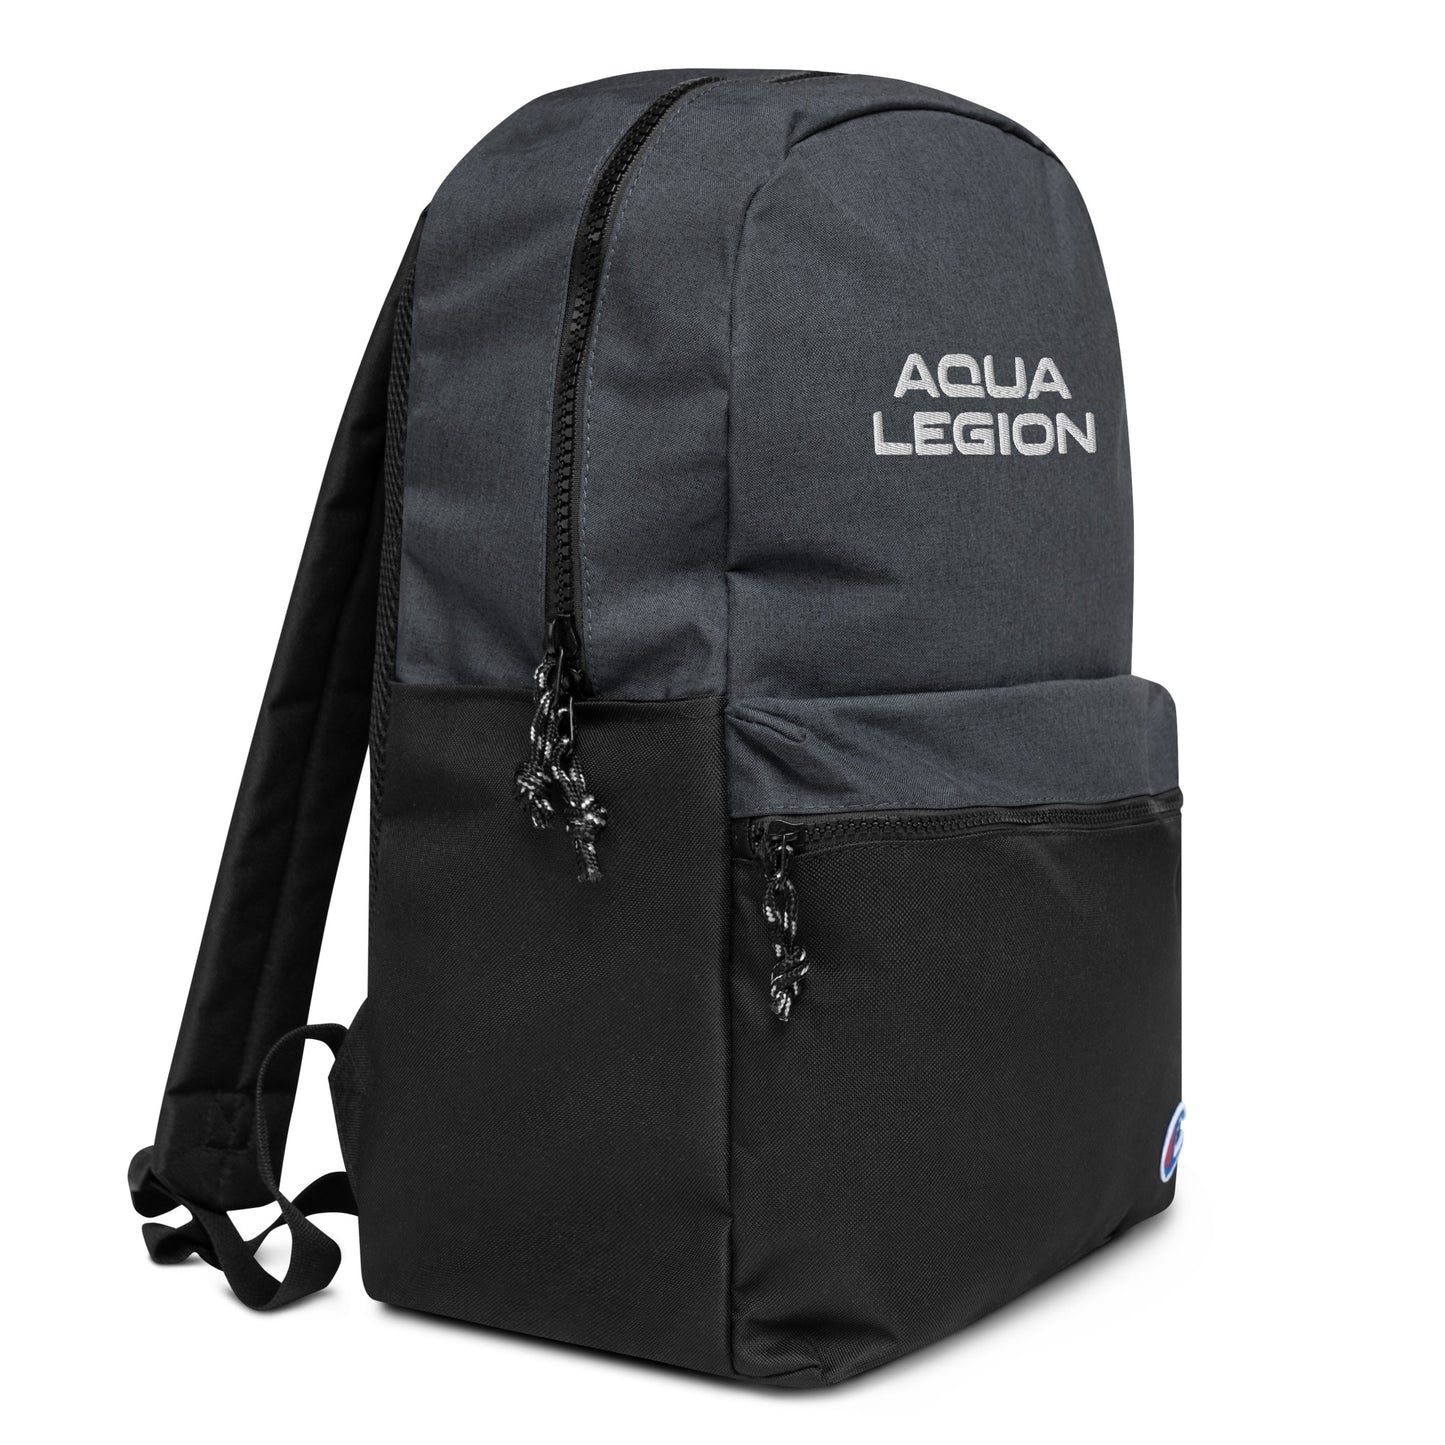 Aqua Legion x Champion Backpack - Dark grey/Black